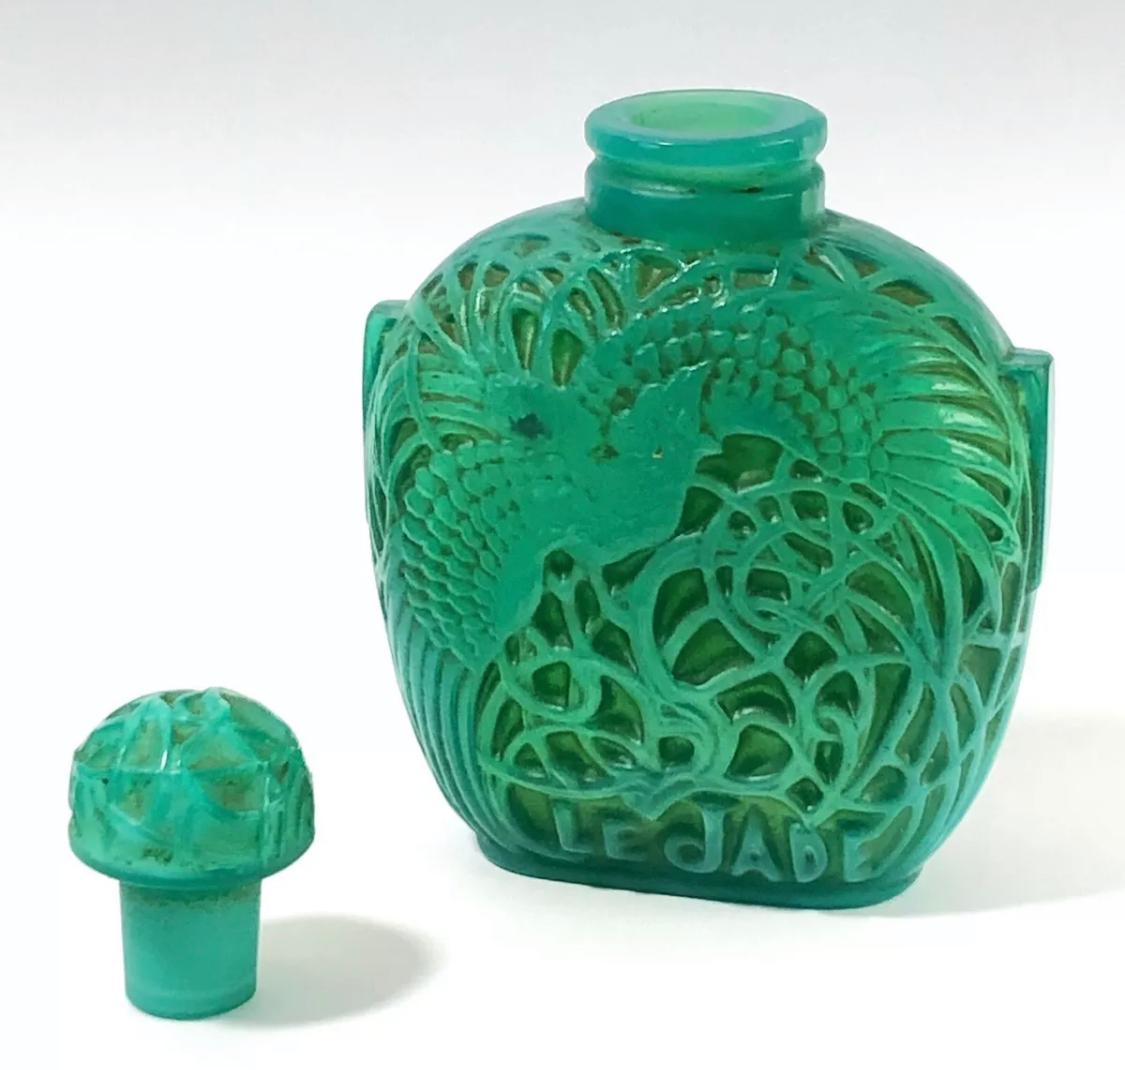 Art Deco 1926 Rene Lalique Le Jade Perfume Bottle for Roger & Gallet Glass, Jade Green